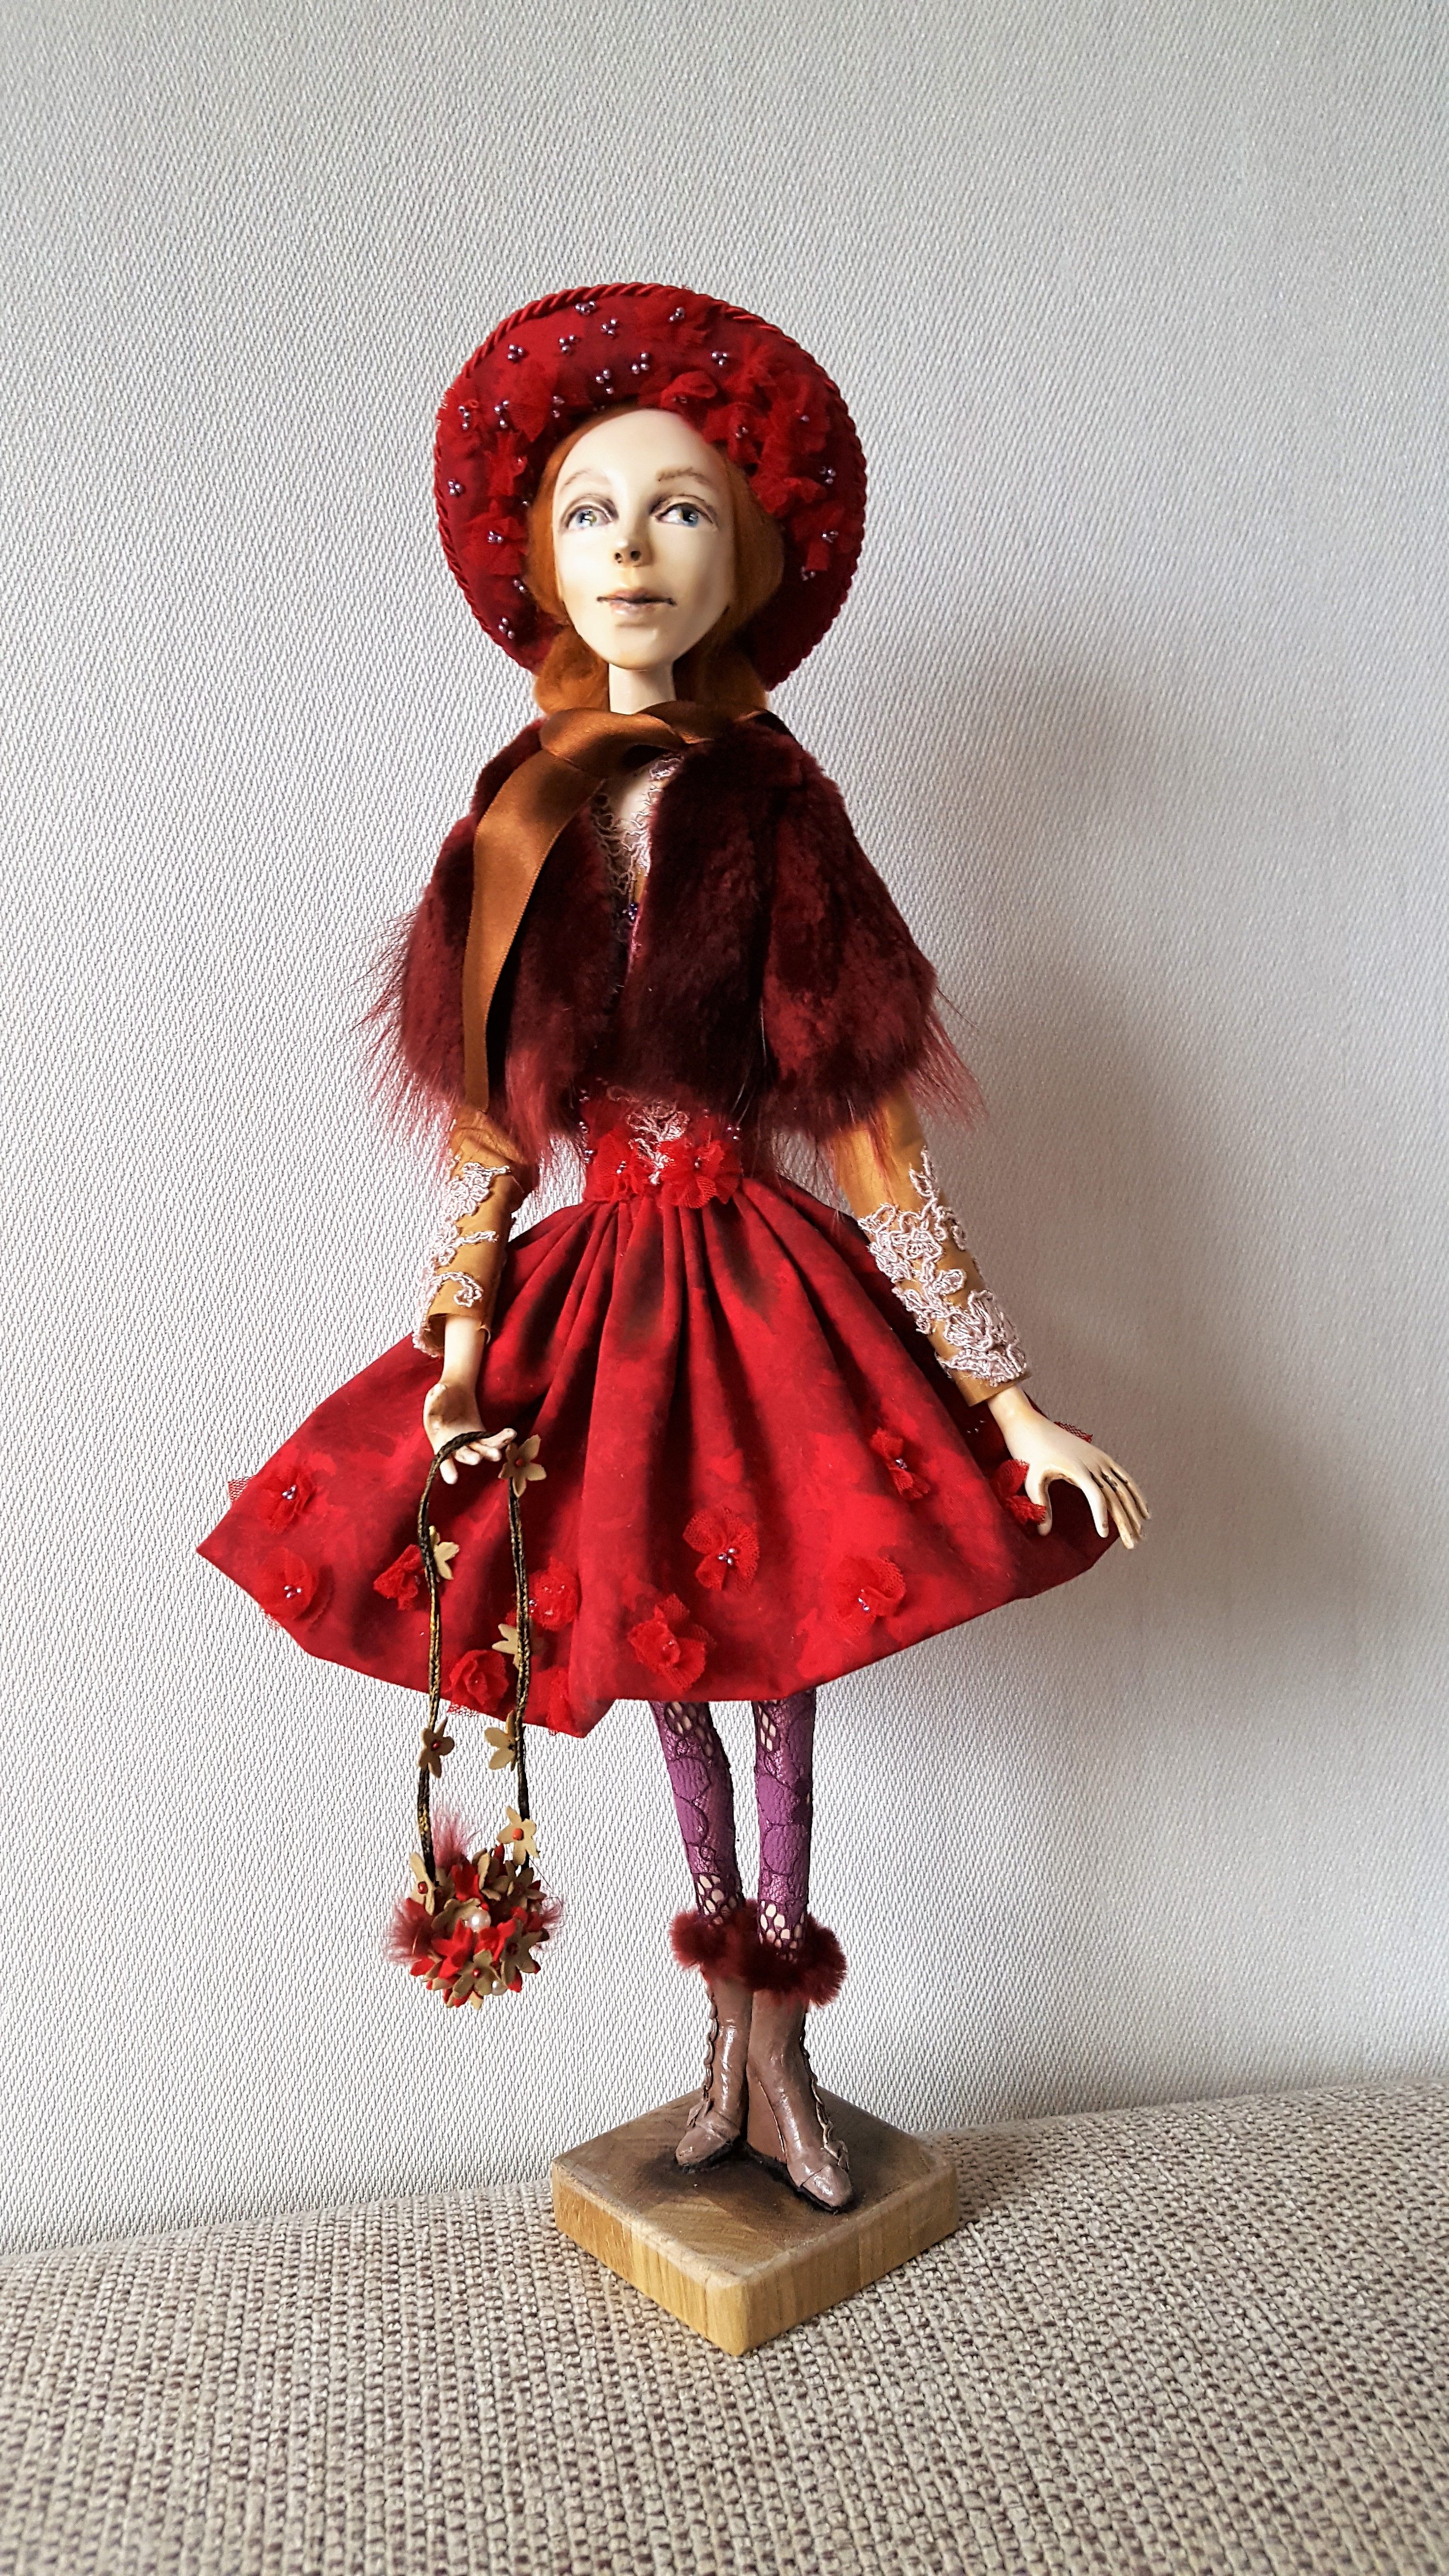 OOAK handmade art doll/ Interior doll/ Home decor/ Collectible doll ...